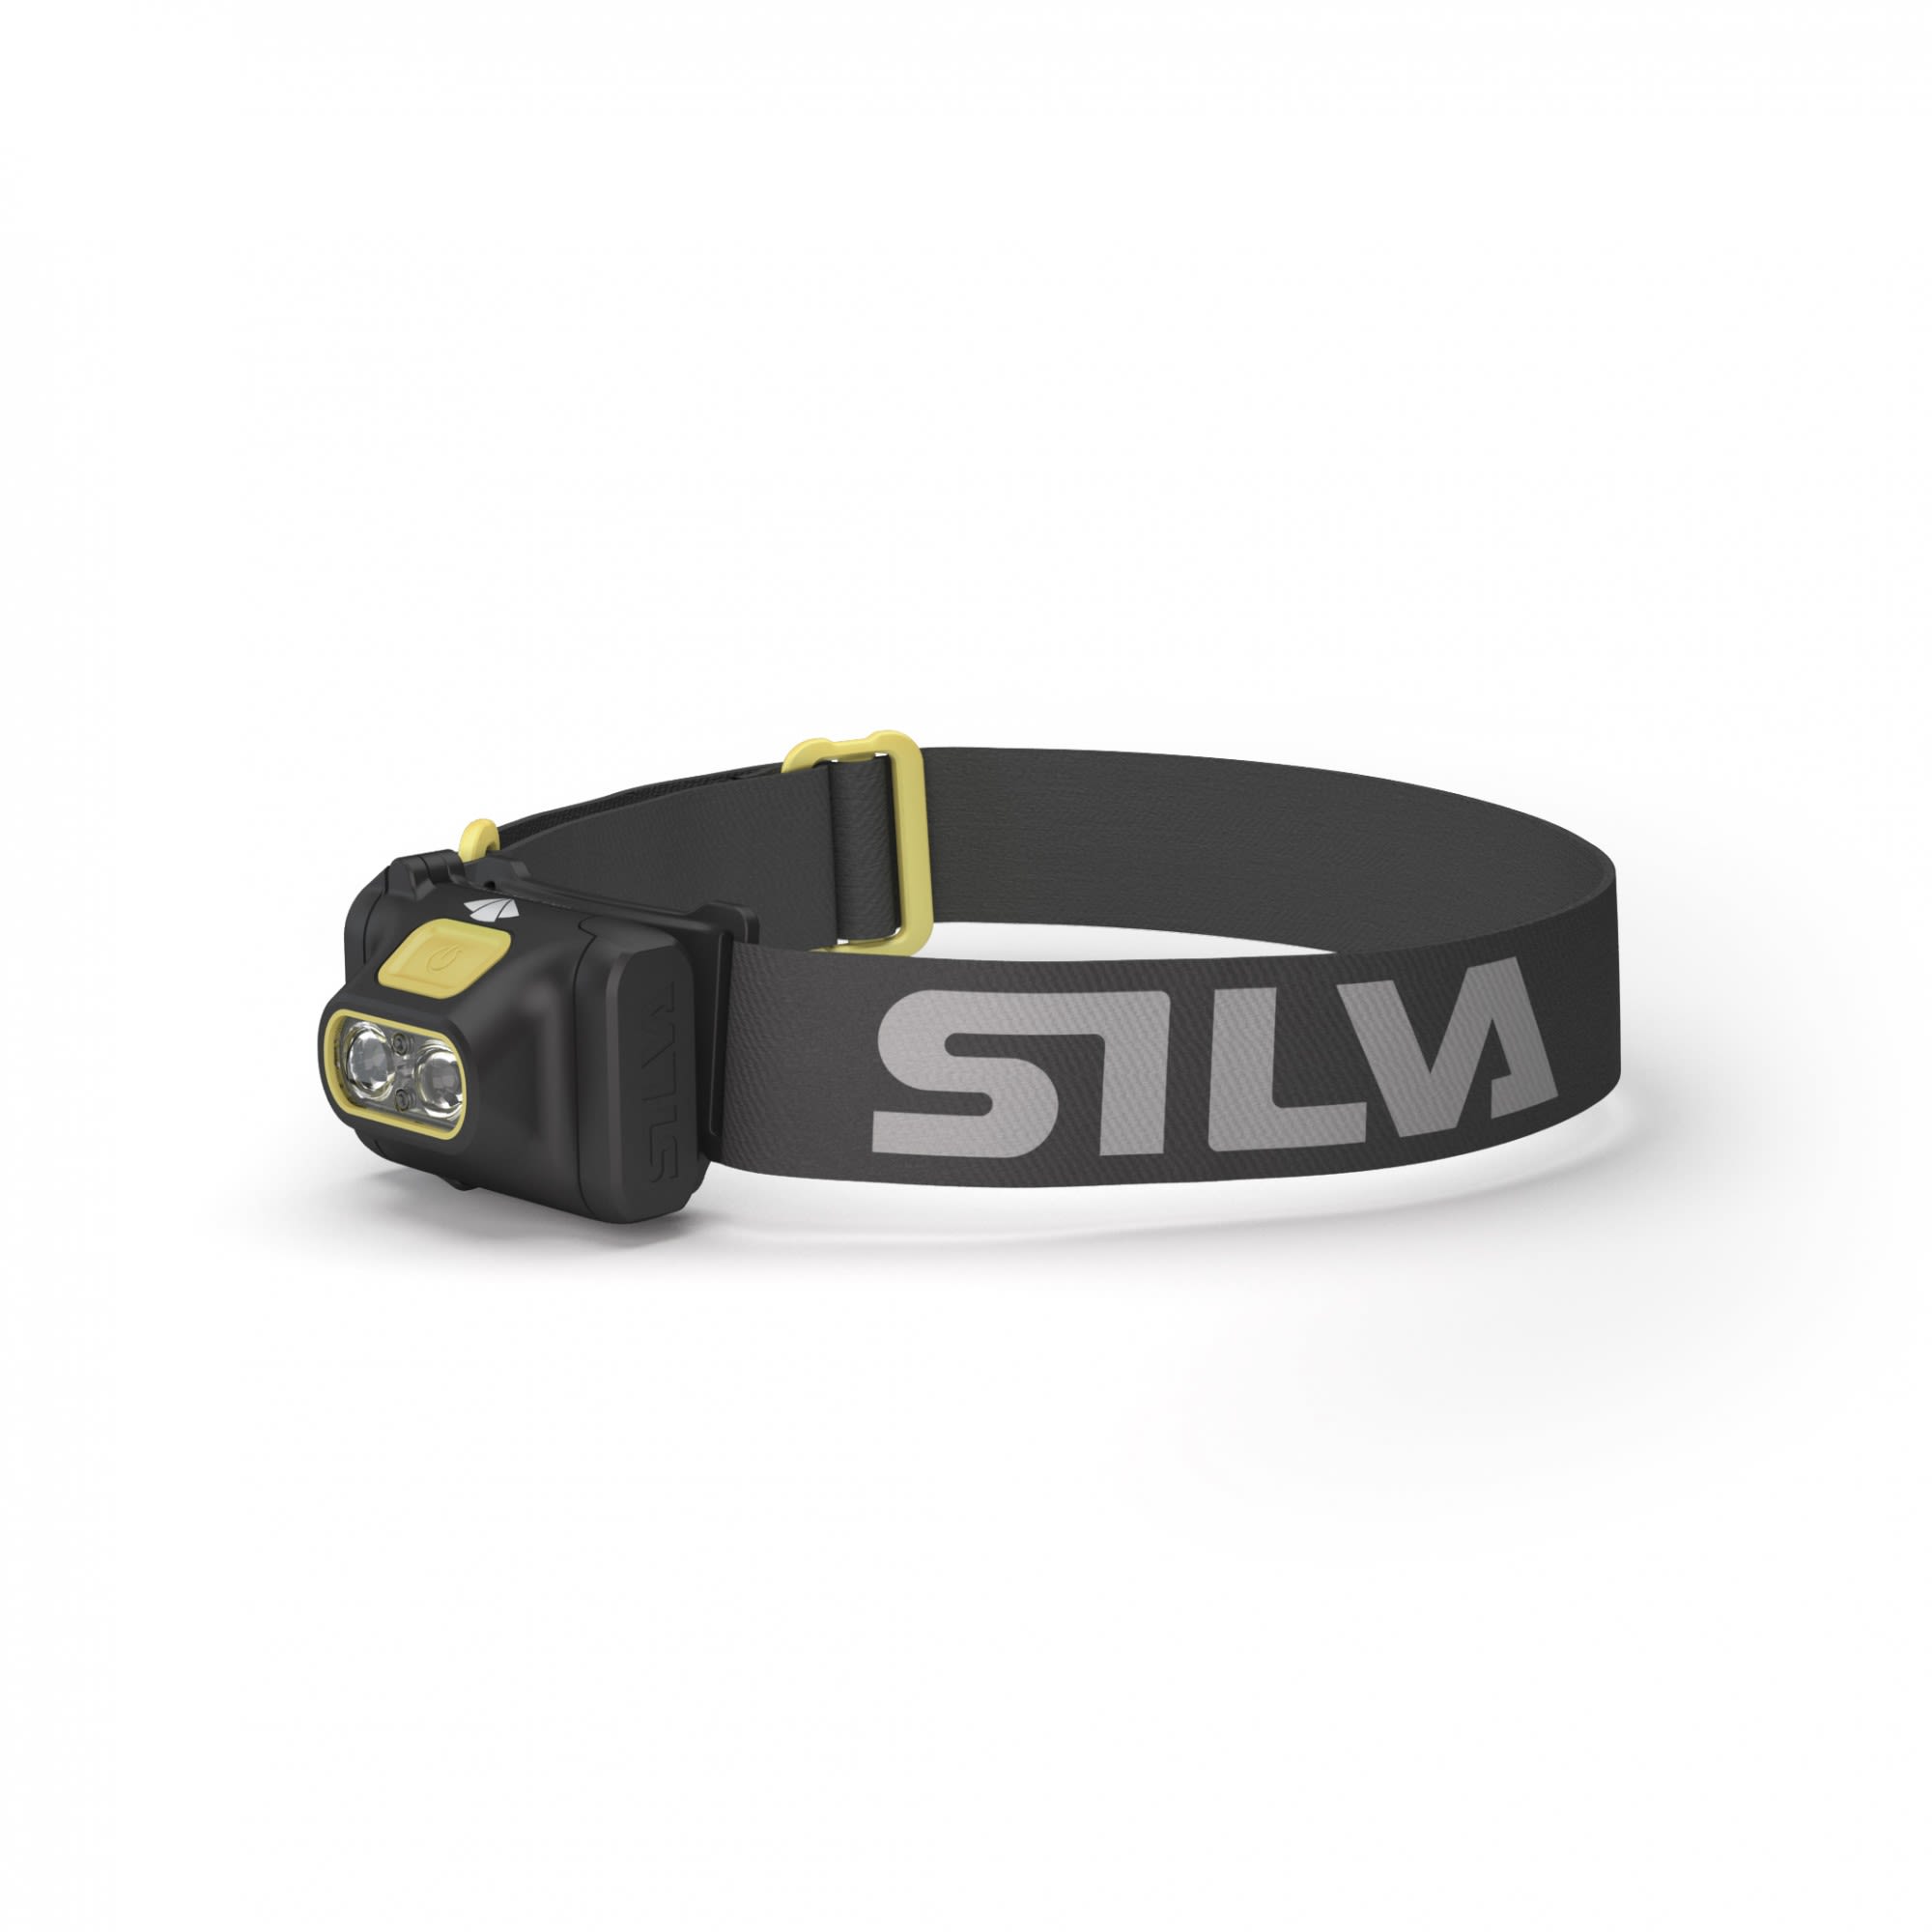 Silva Scout 3 Schwarz- Stirnlampen- Grsse One Size - Farbe Black - Yellow unter Silva